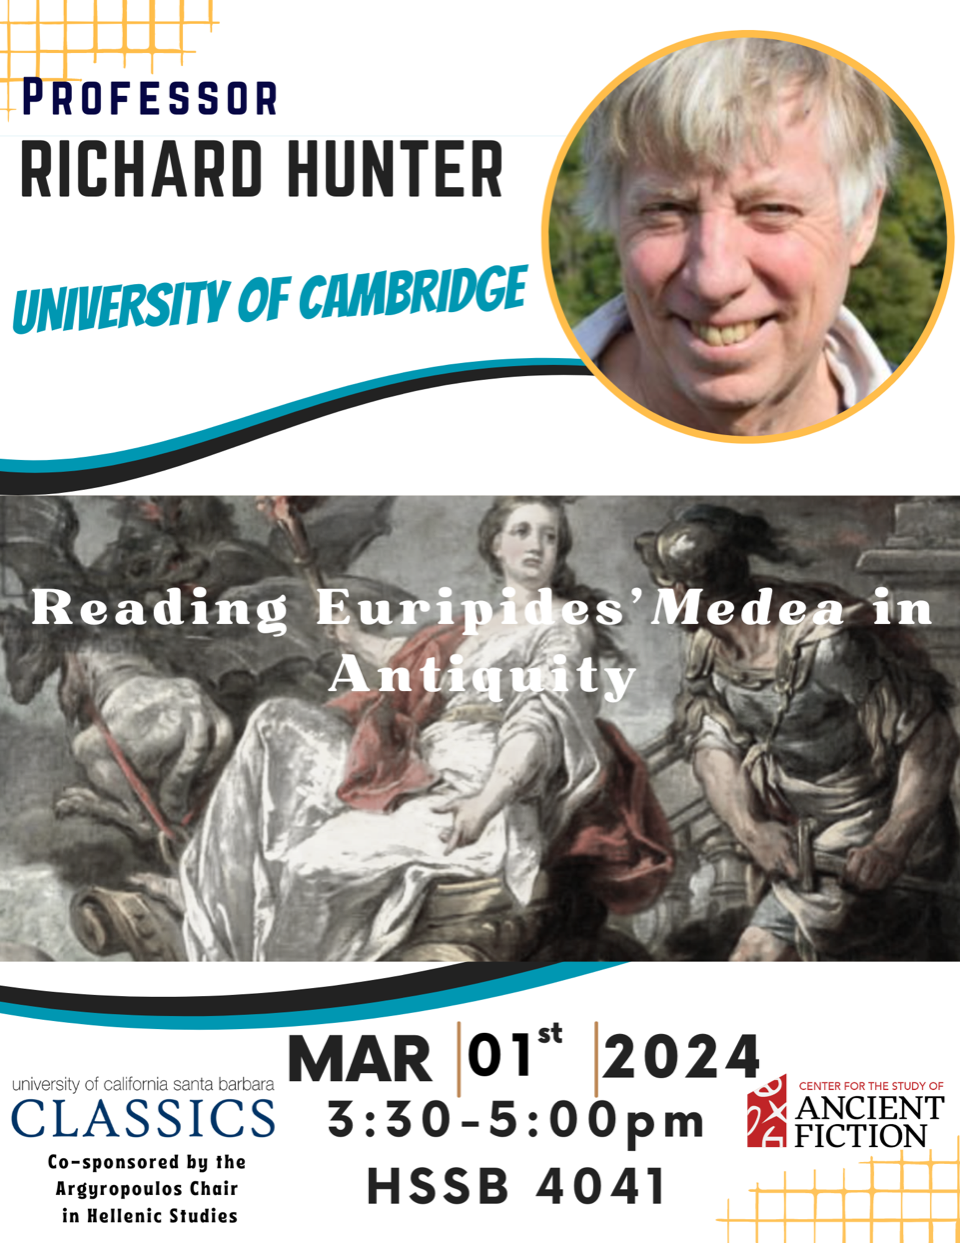 Richard Hunter (University of Cambridge): "Reading Euripides' Medea in Antiquity" @ HSSB 4041